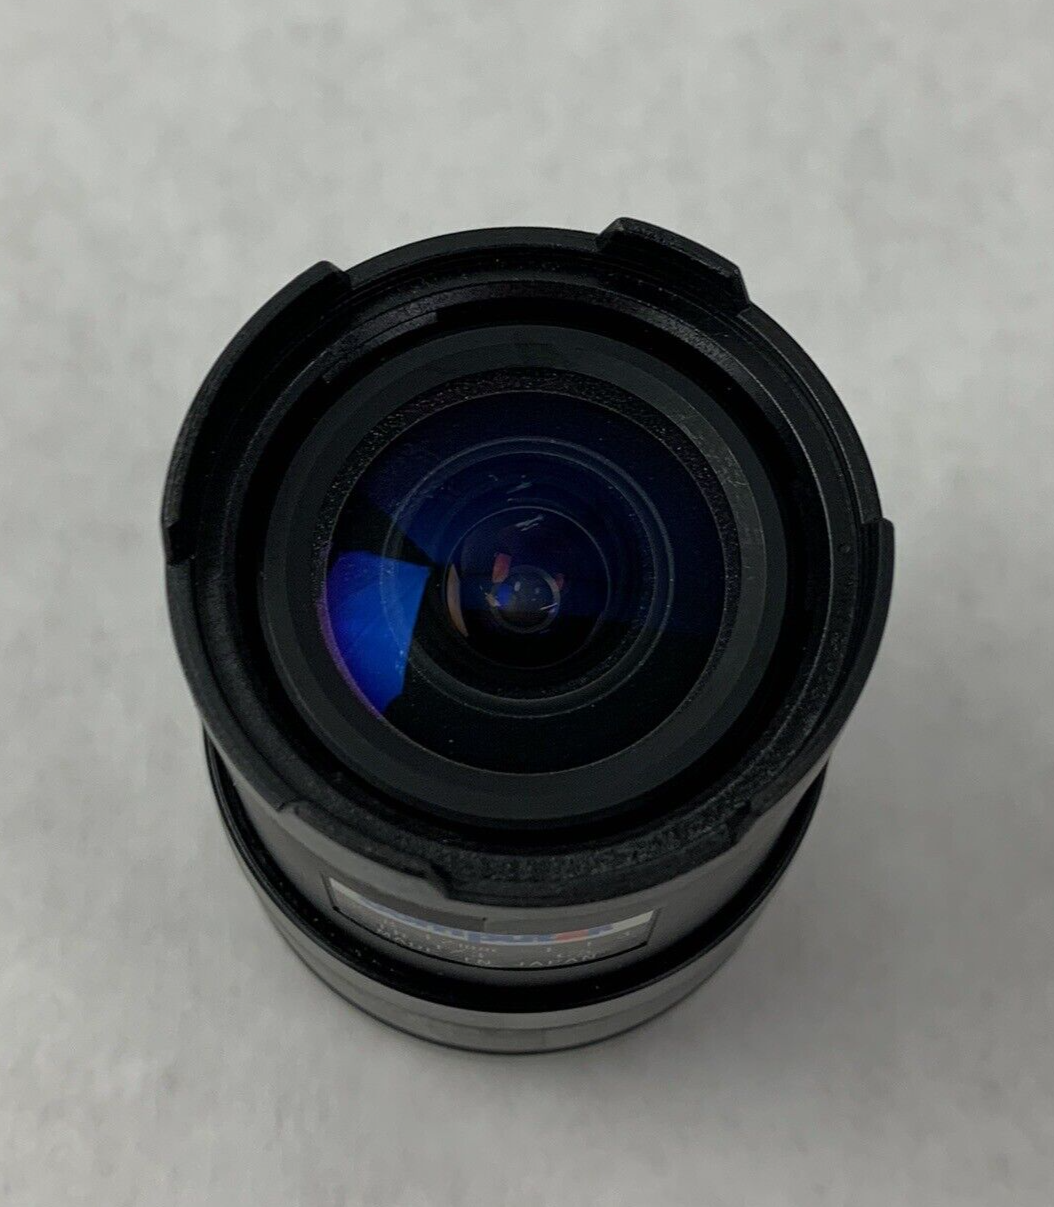 Computar 2.8-12mm 1:1.3 1/3" CS Security Camera Lens 06I